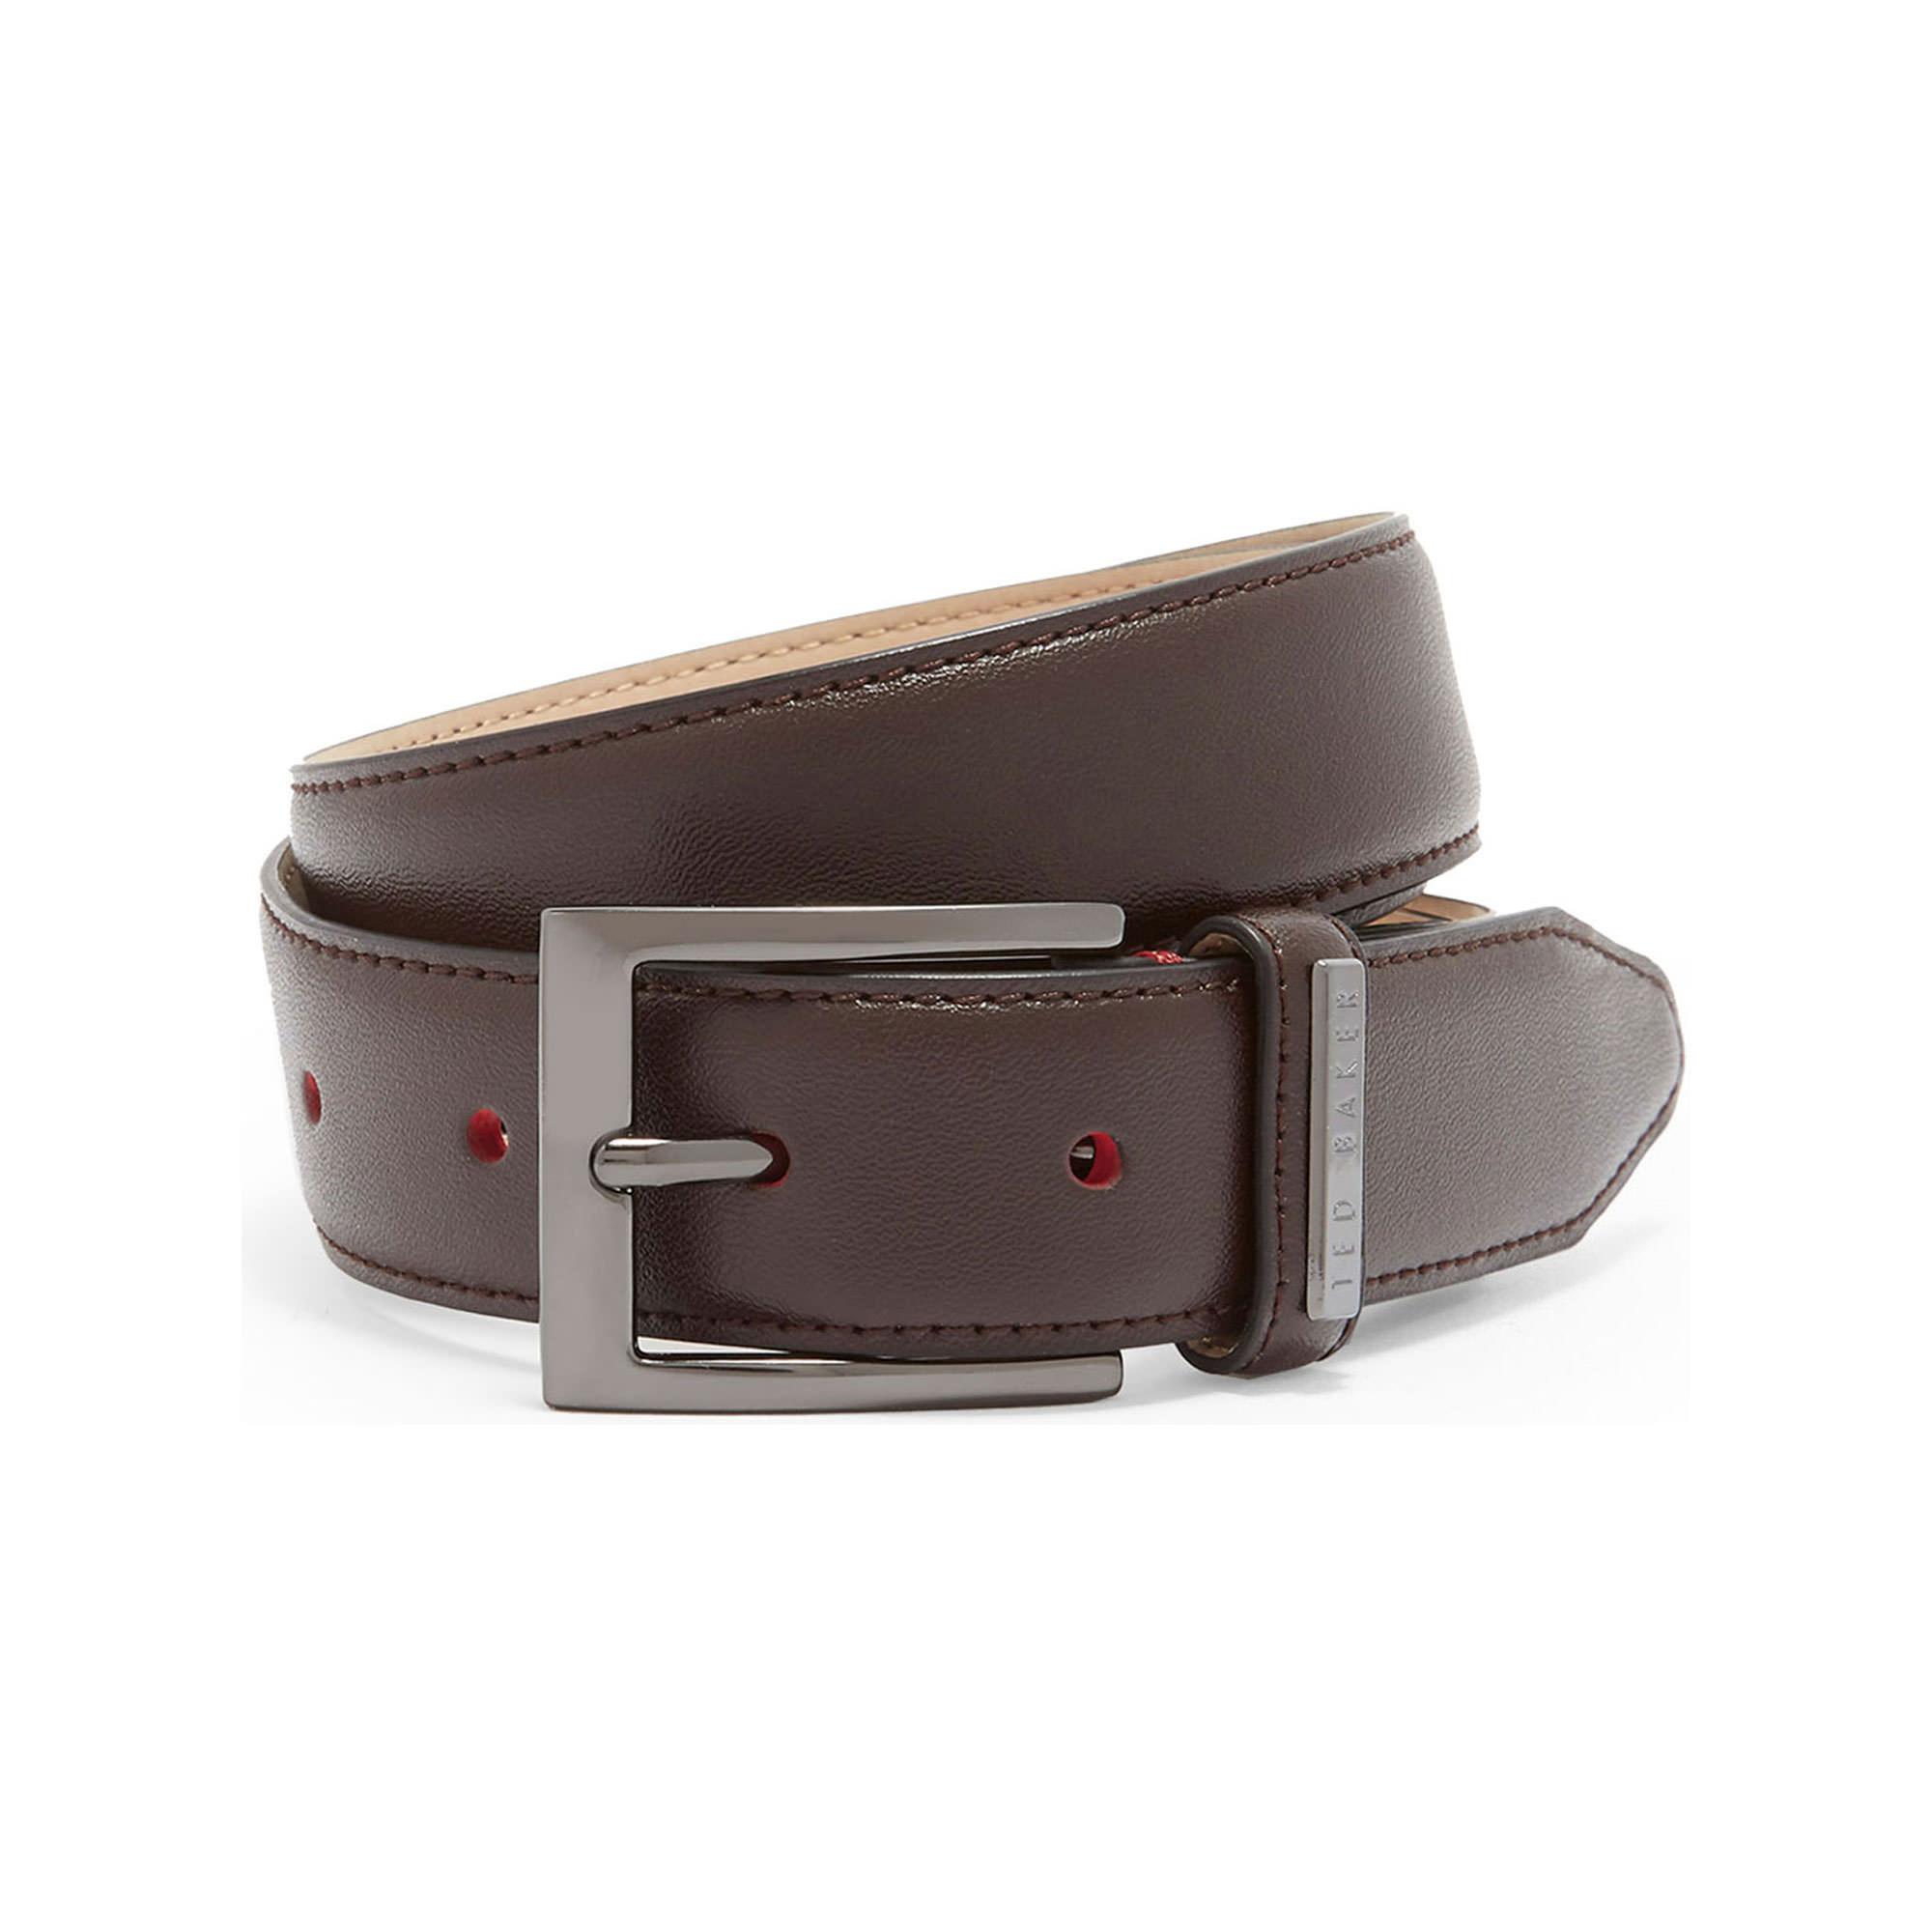 Lizwiz Leather Belt